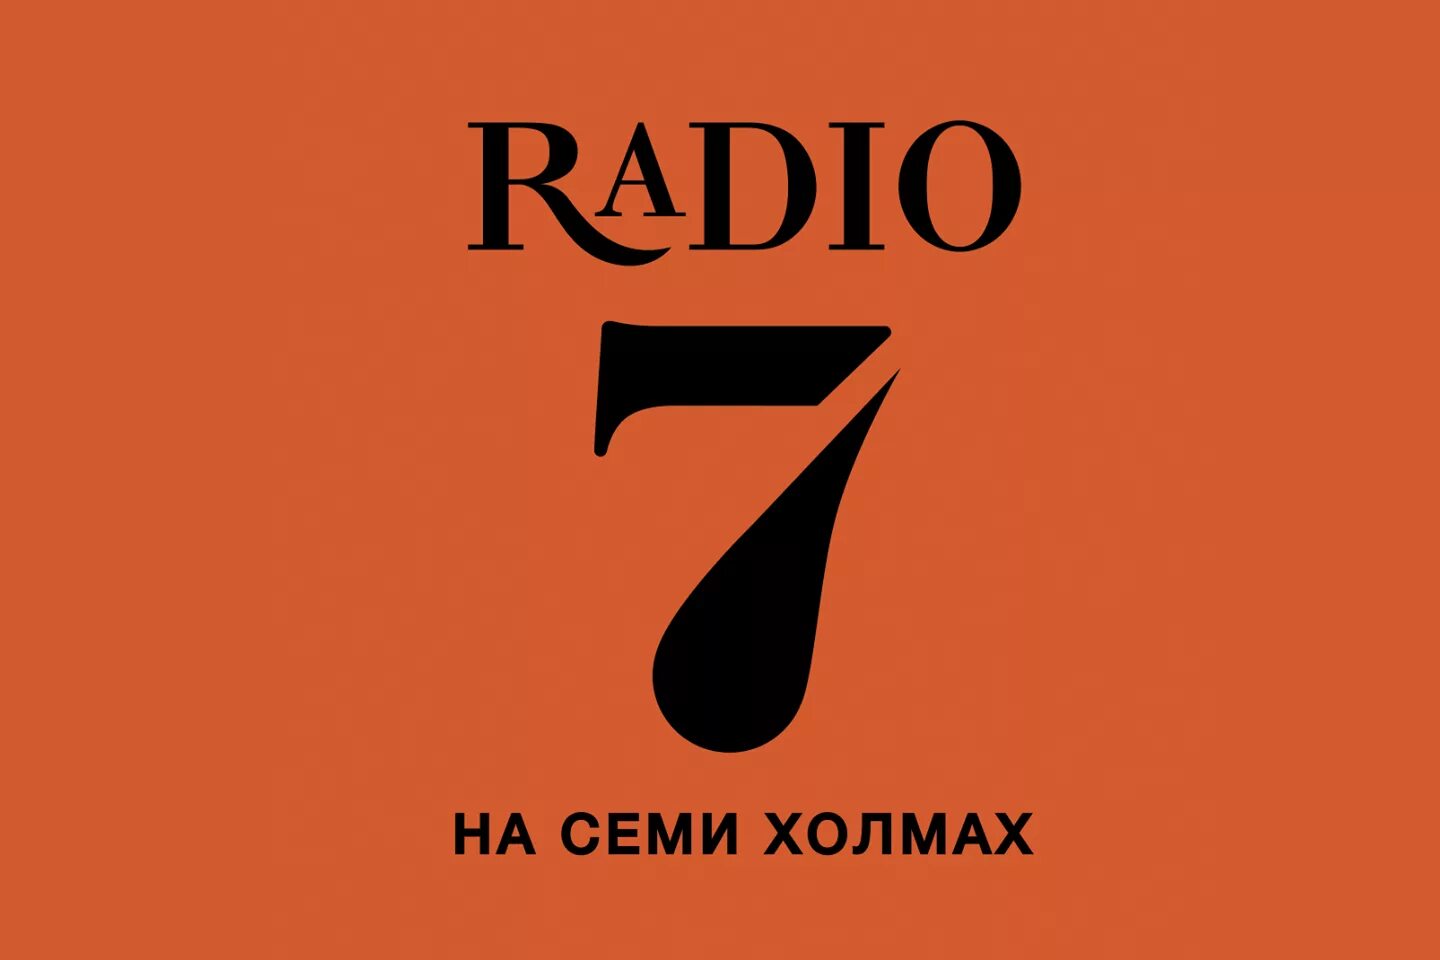 Радио 7 2. Радио 7. Радио 7 логотип. Лого радиостанции на 7 холмах. Радио на семи холмах.